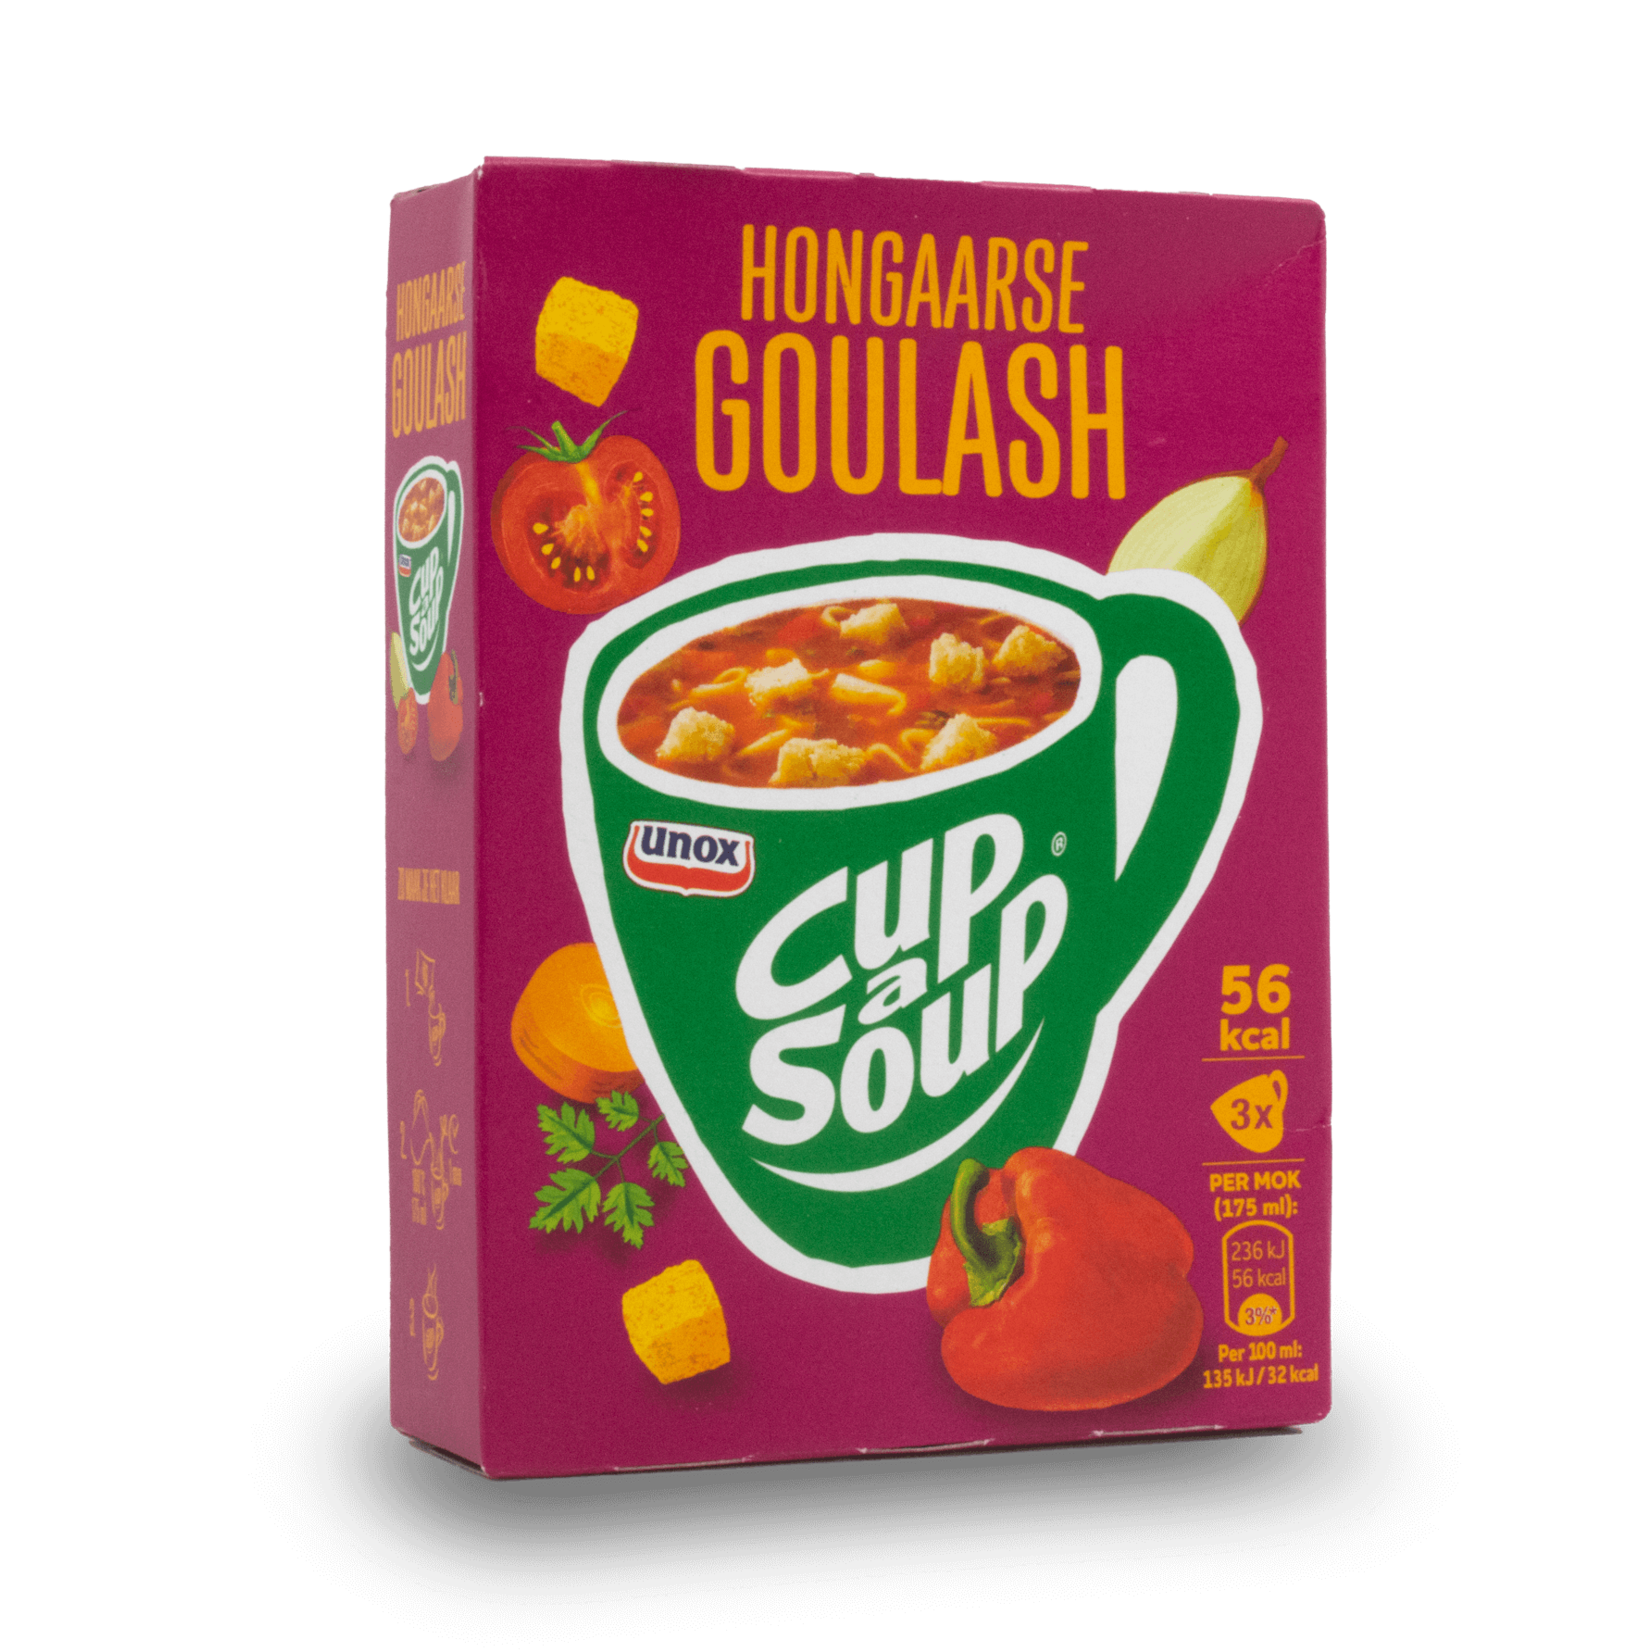 Unox Unox Cup a Soup - Hungarian Goulash 3x16g